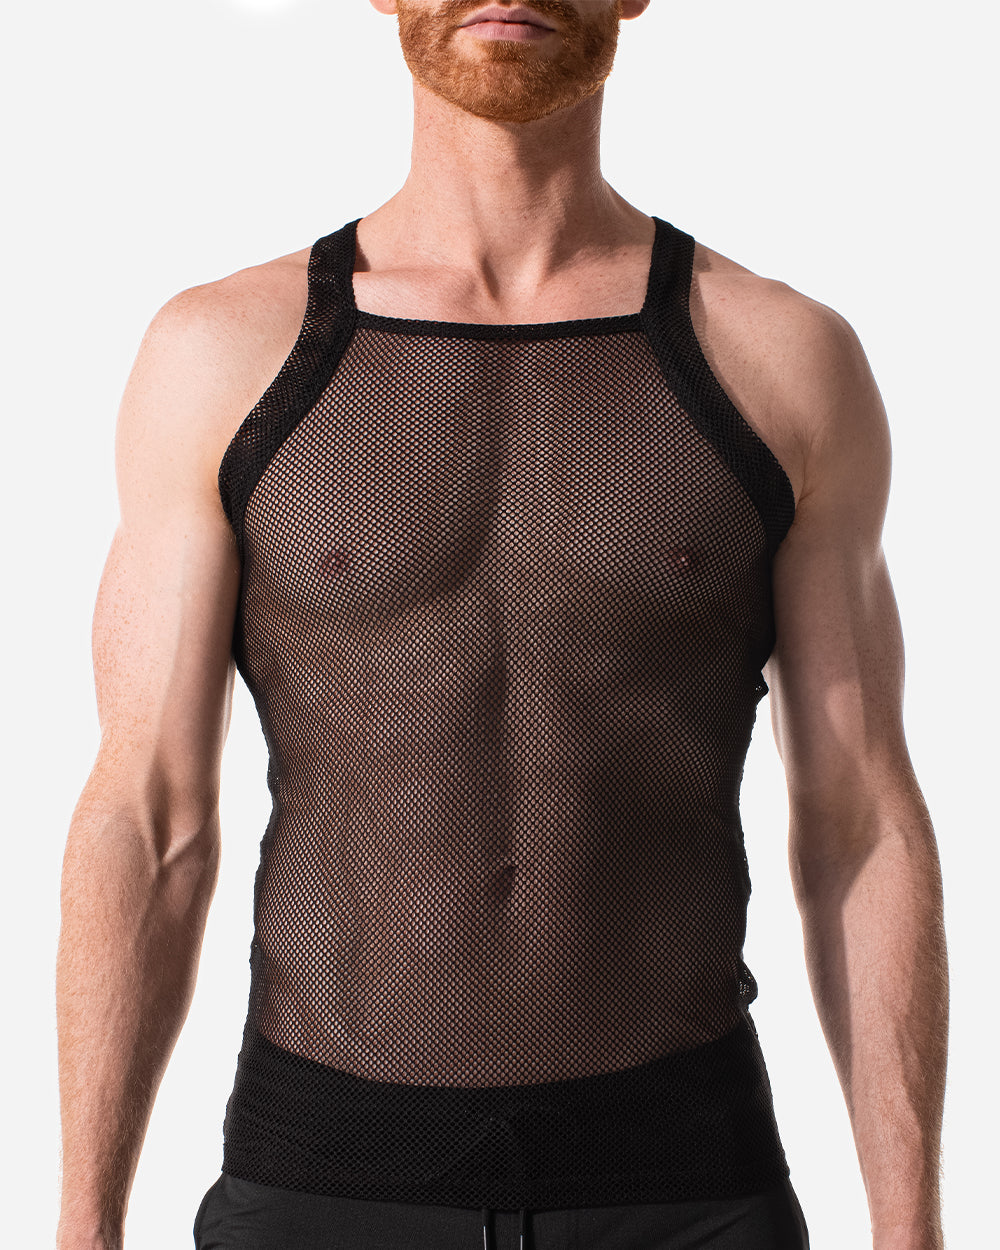 Buy FoXiSN Men's Underwear Mens Mesh Briefs Breathable Mens Mesh